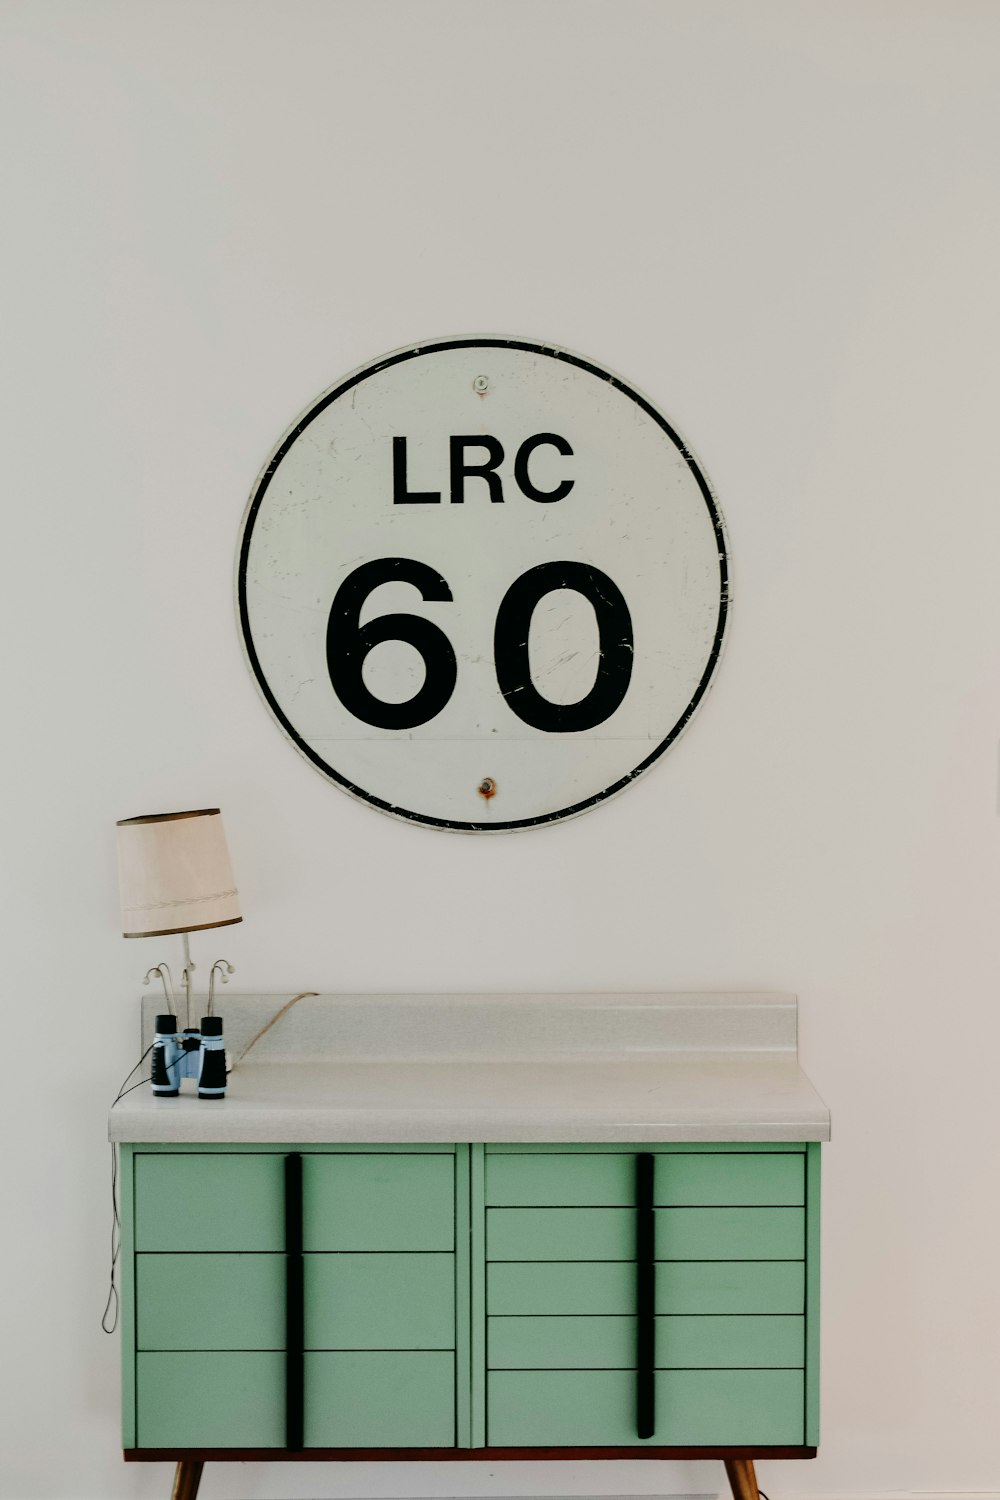 LRC 60 벽 간판 근처의 갈색 전등갓이 있는 흰색과 녹색 나무 책상